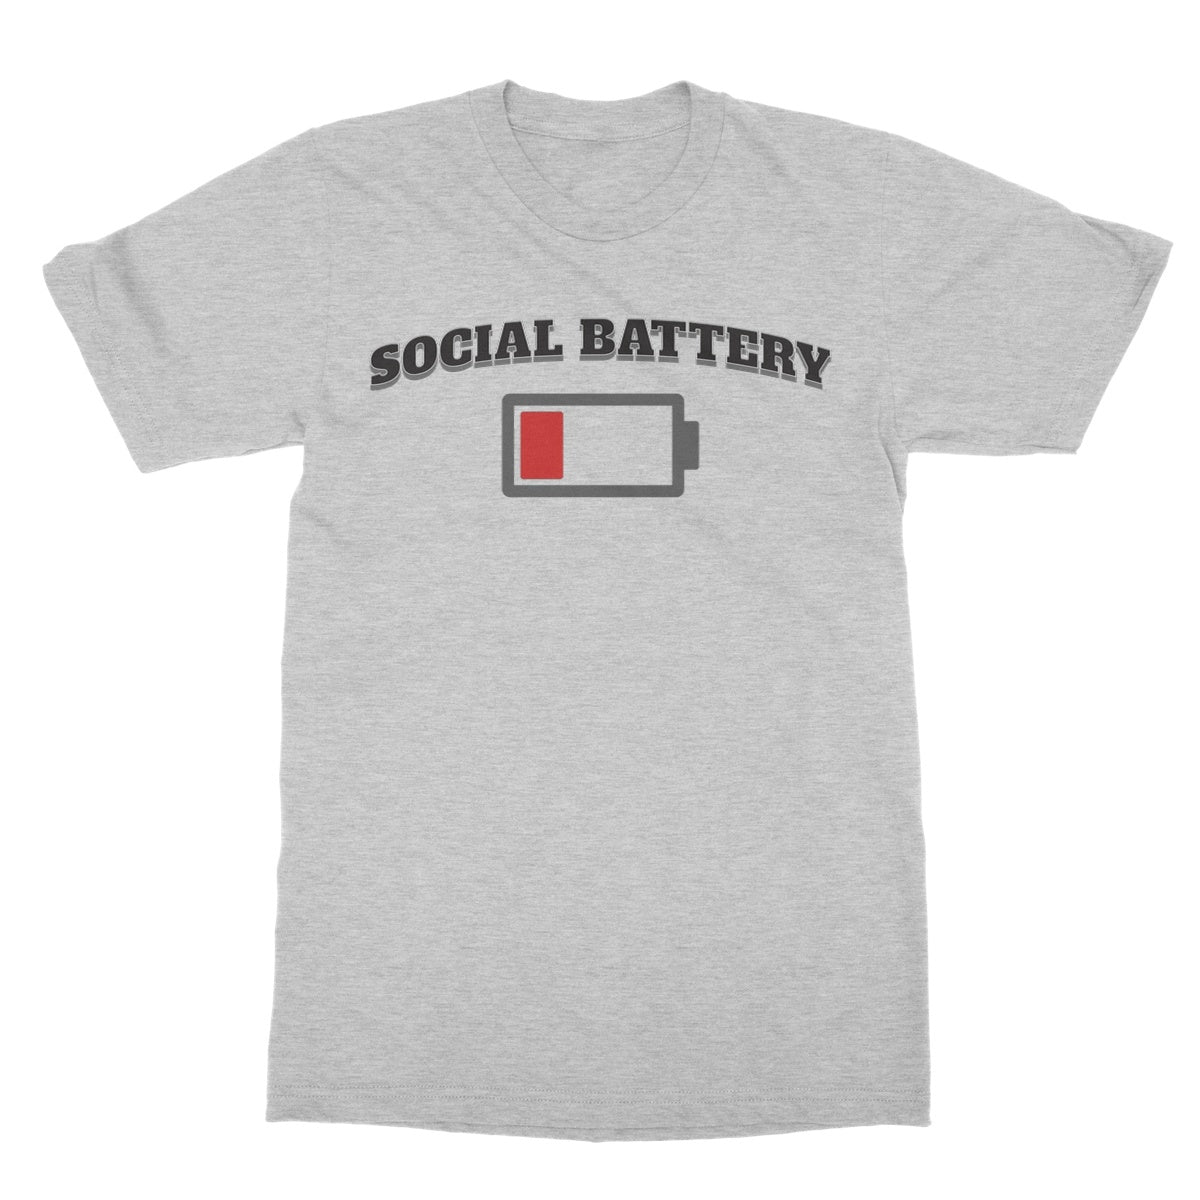 low social battery t shirt grey